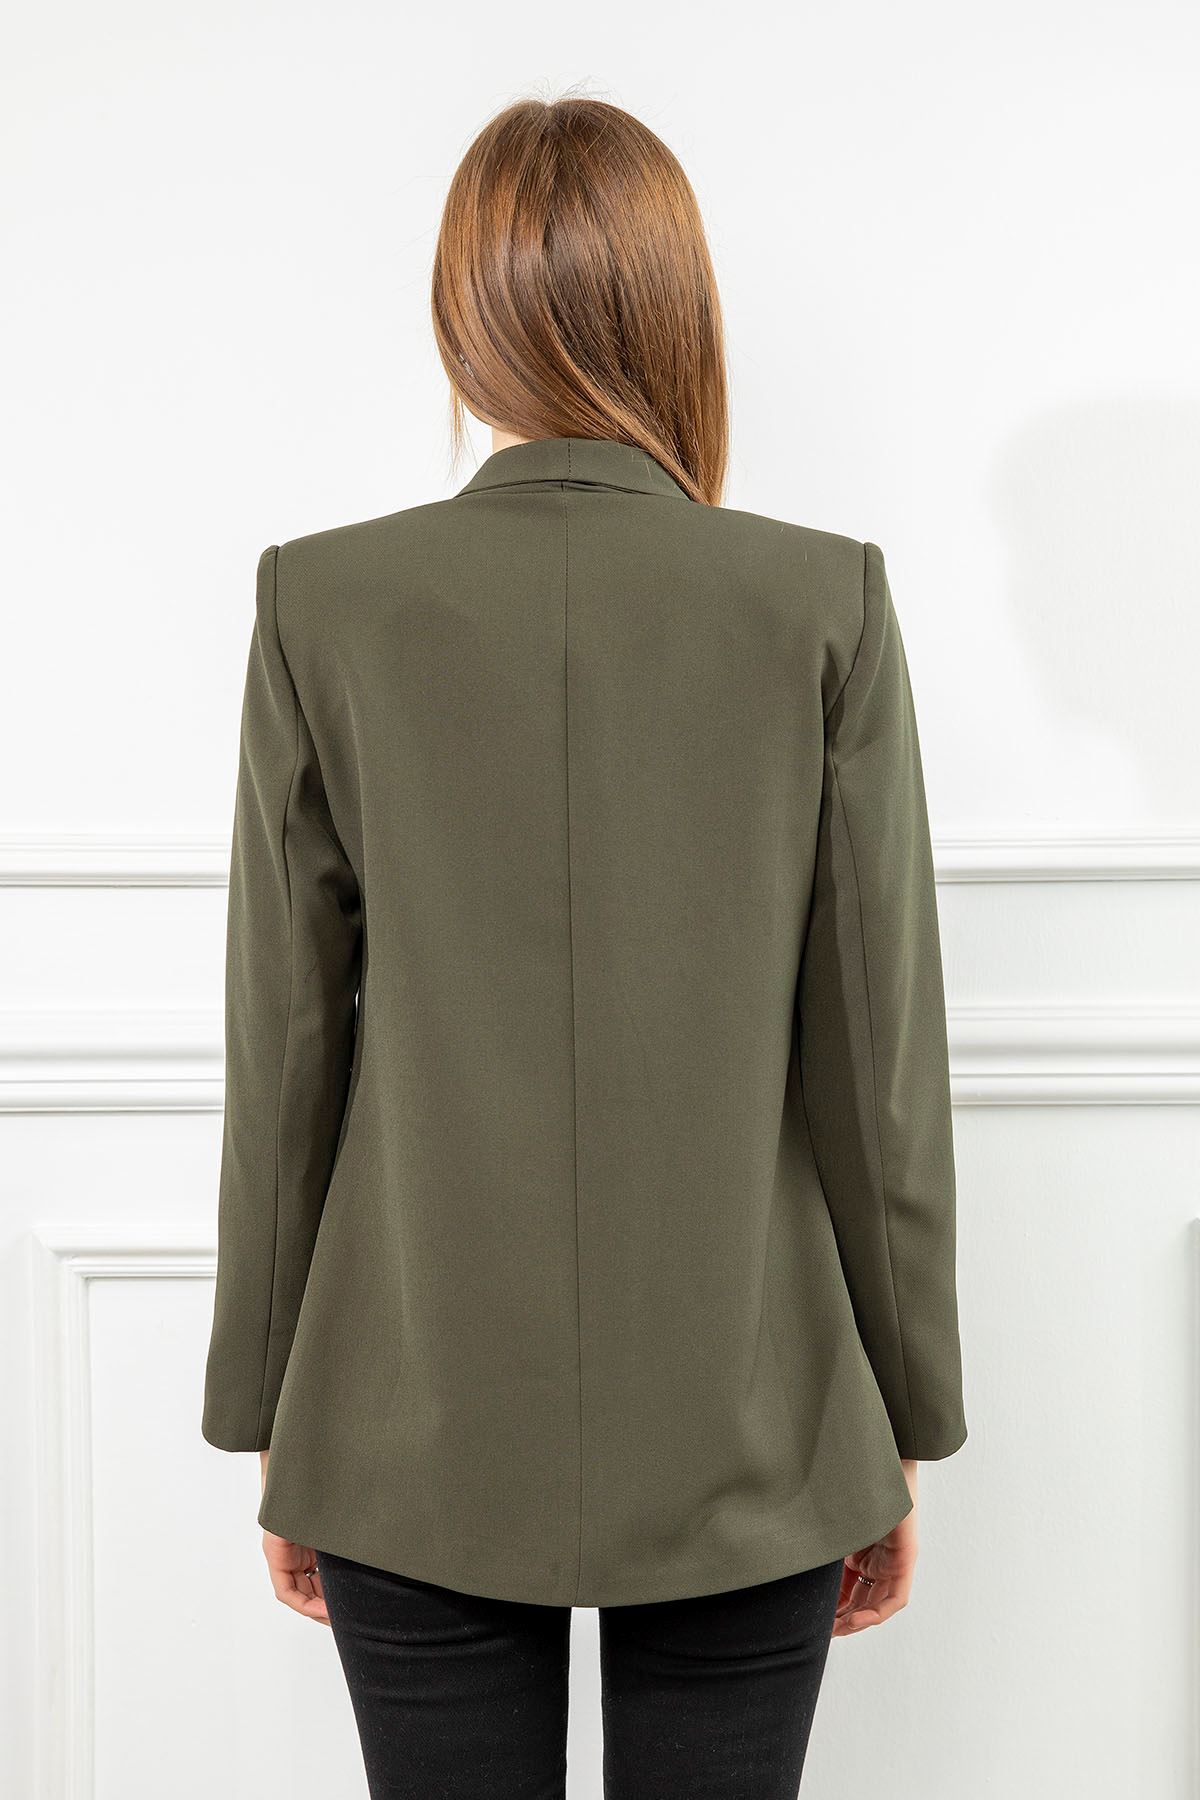 Polyester Fabric Shawl Collar Hip Height Classical Blazer Women Jacket - Khaki 